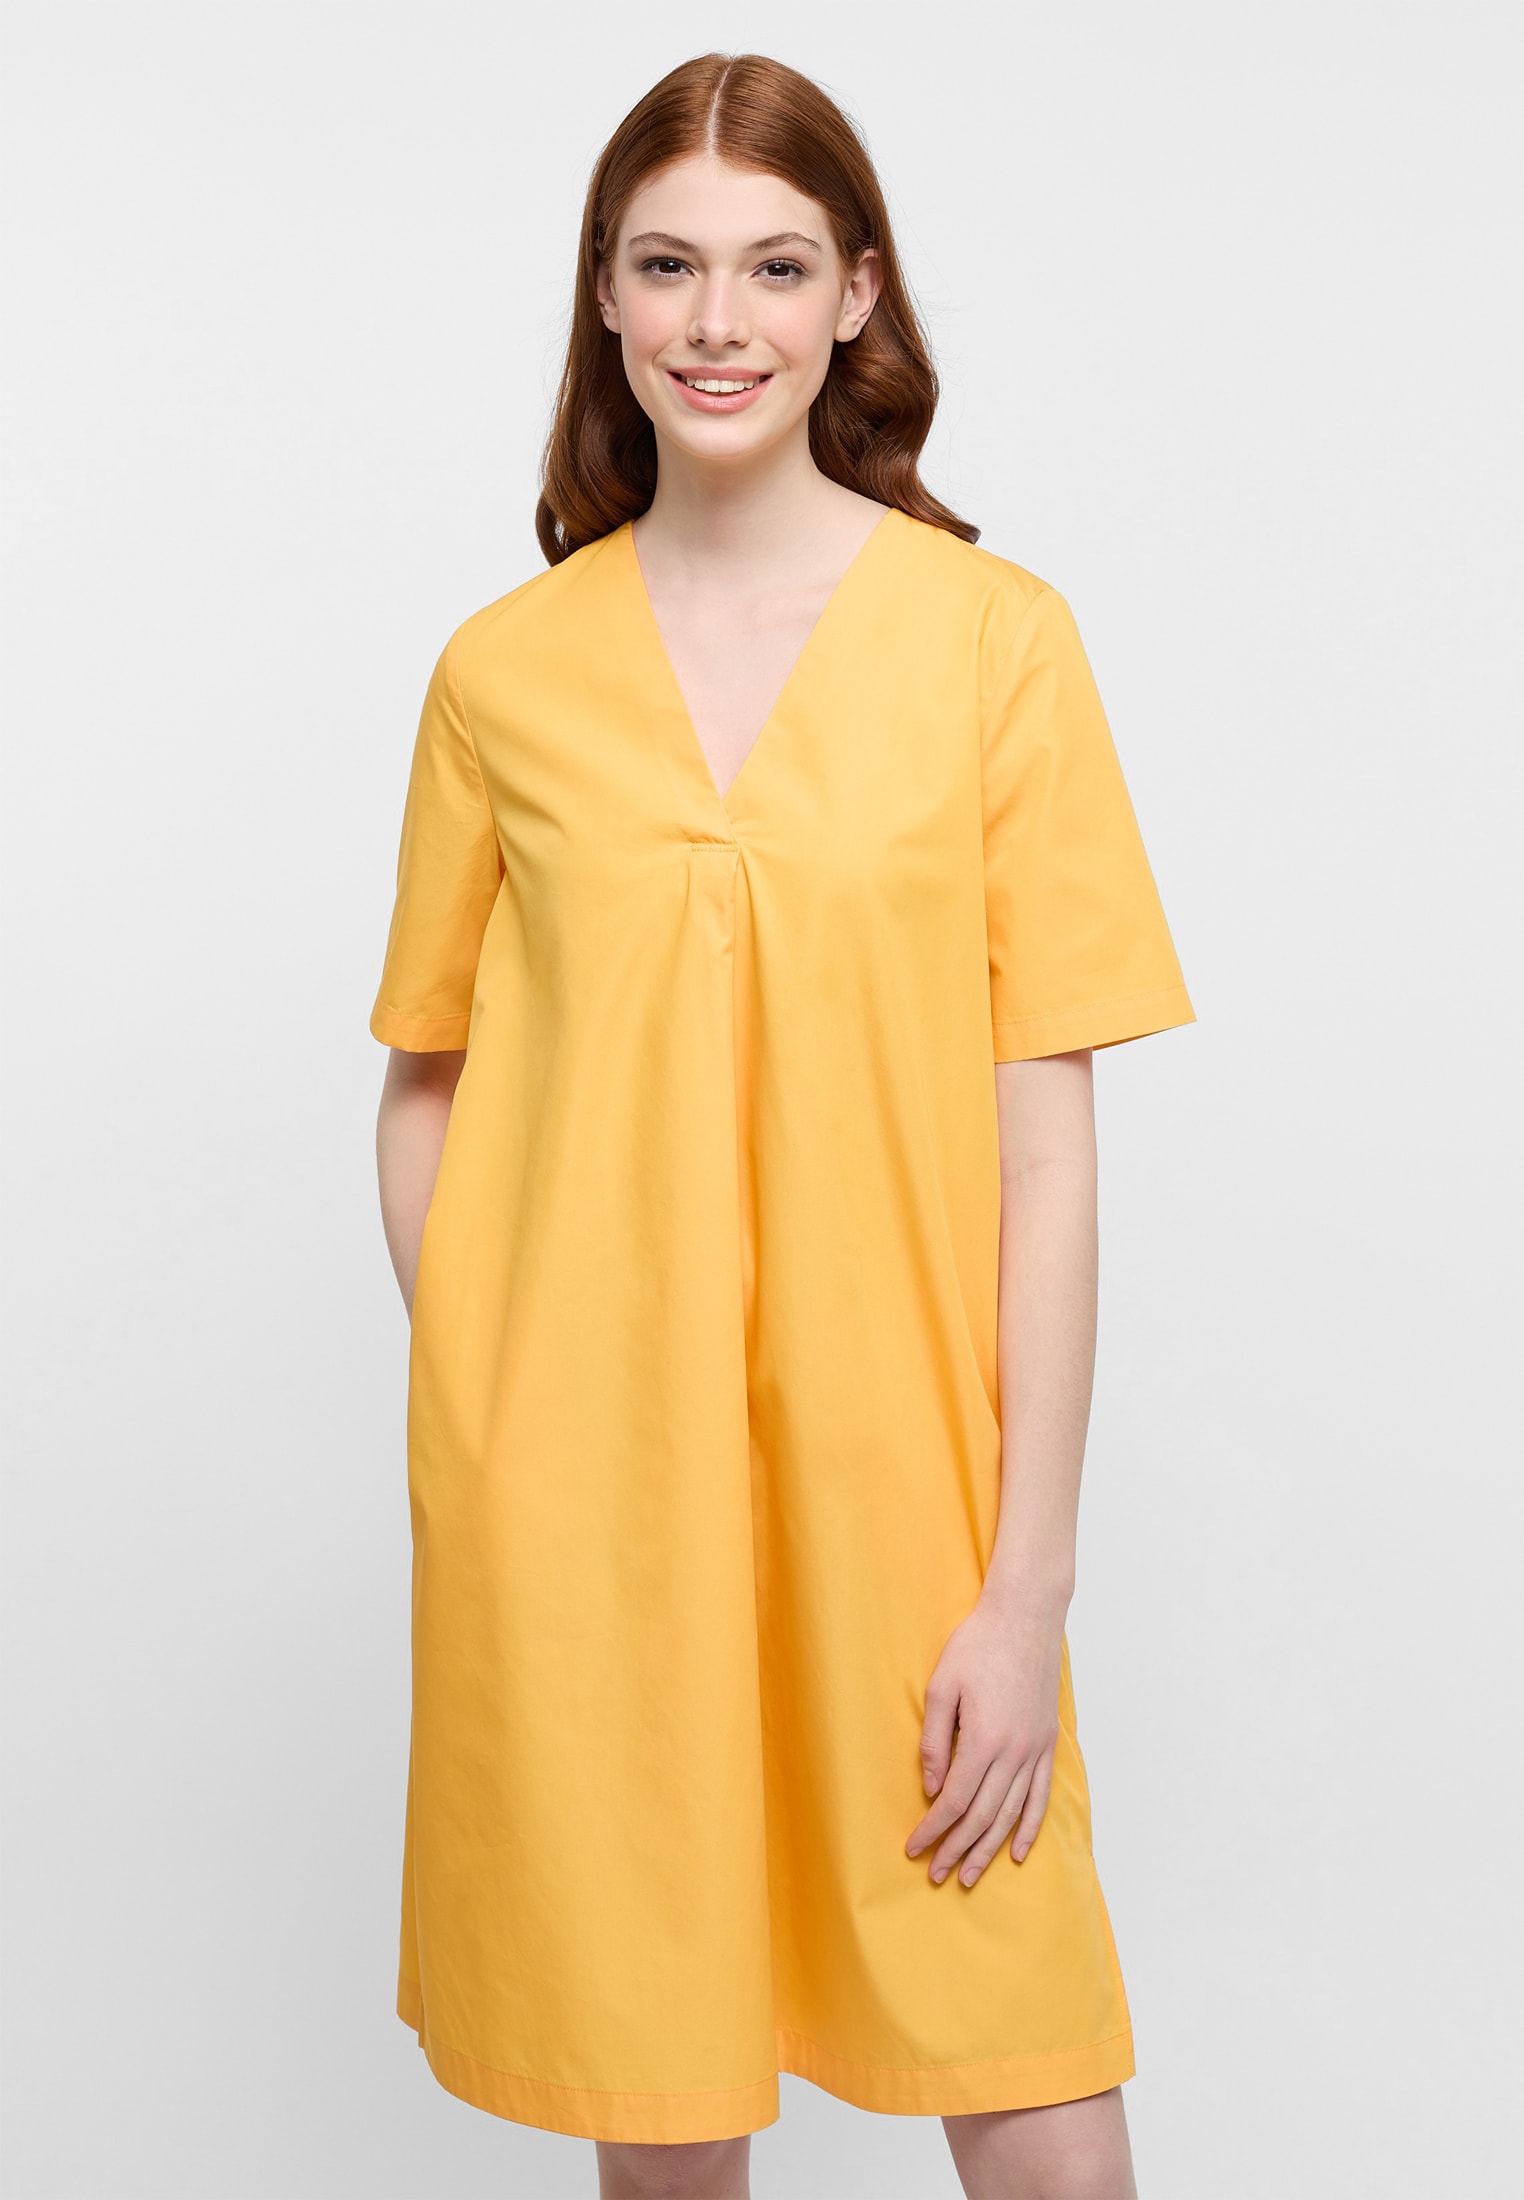 Shirt dress in | mandarin short 42 2DR00211-08-21-42-1/2 mandarin | | sleeve plain 